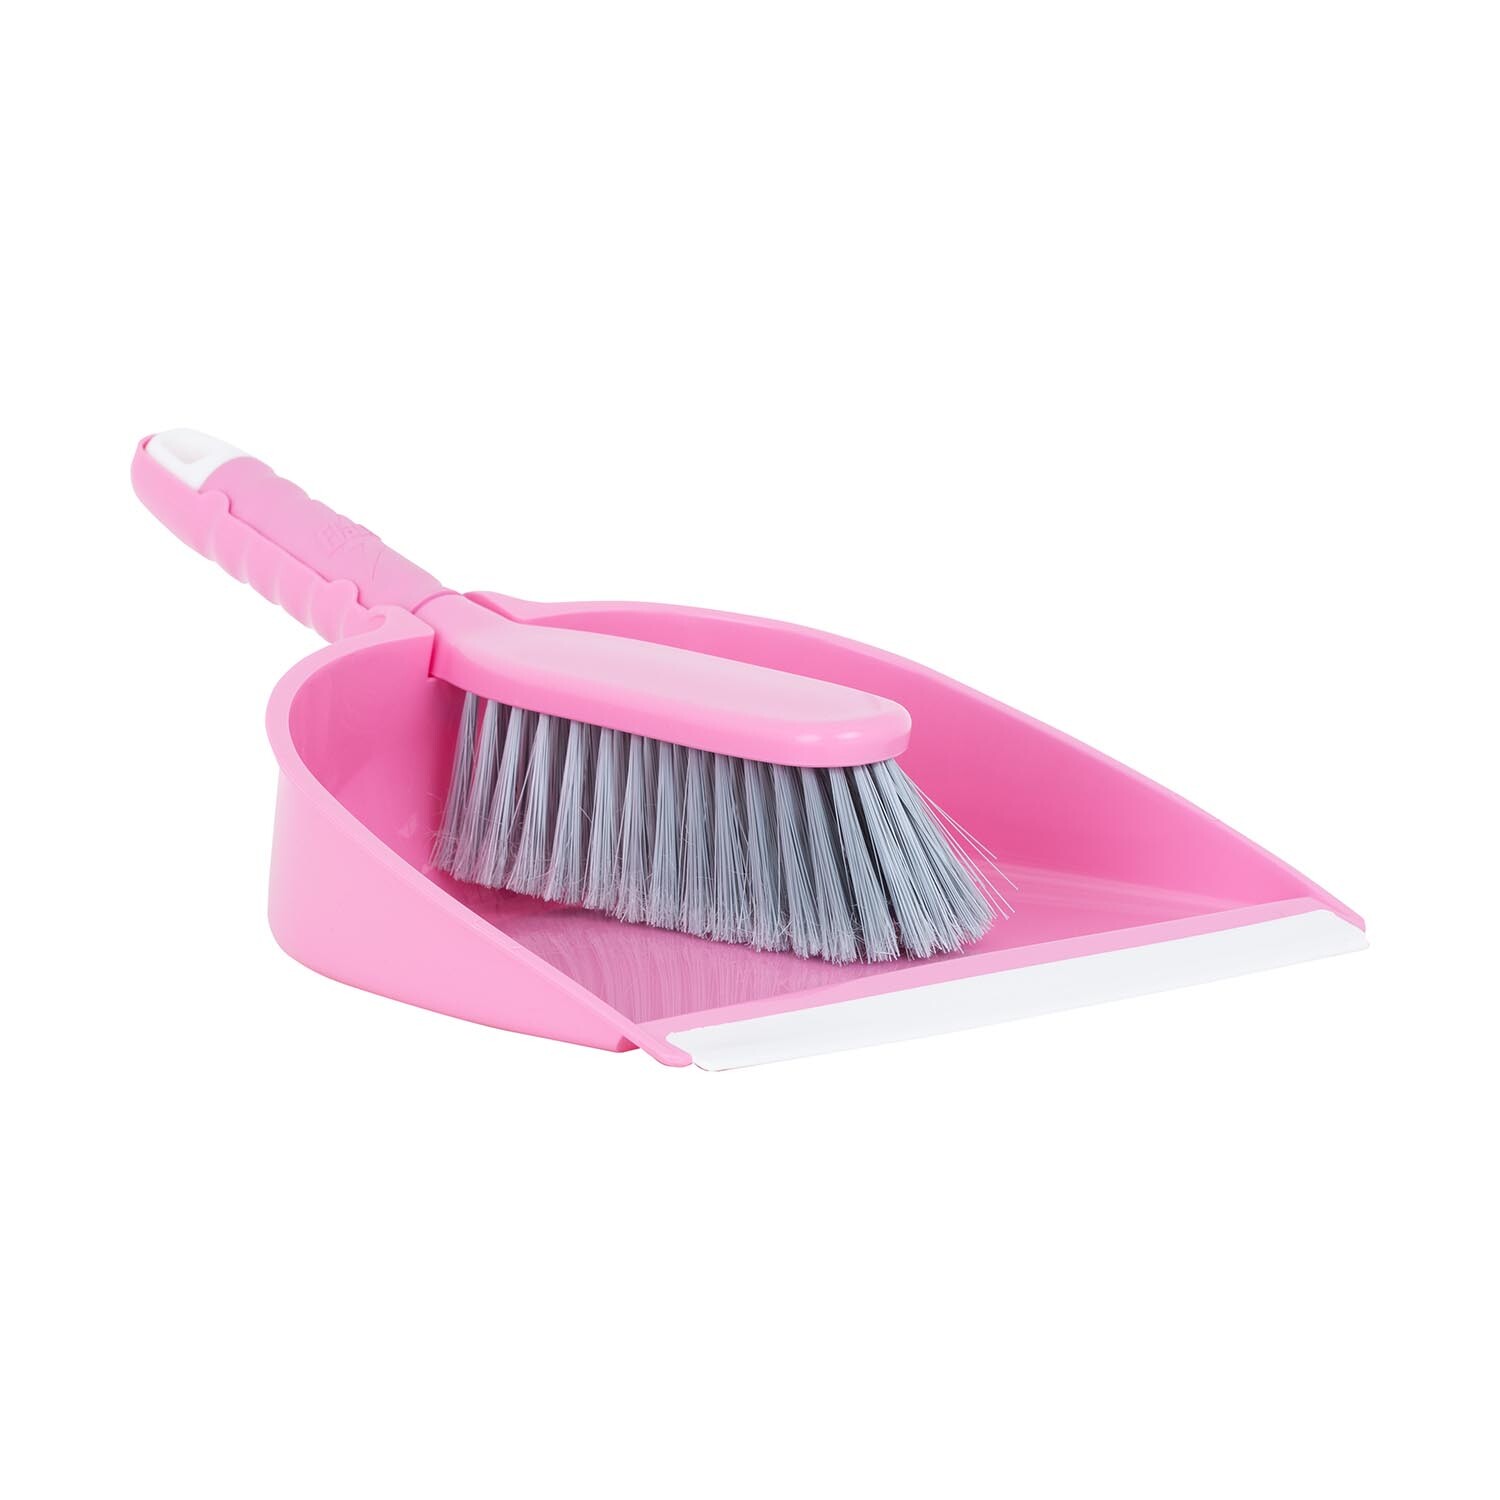 Flash Dustpan and Brush Set - Pink Image 1